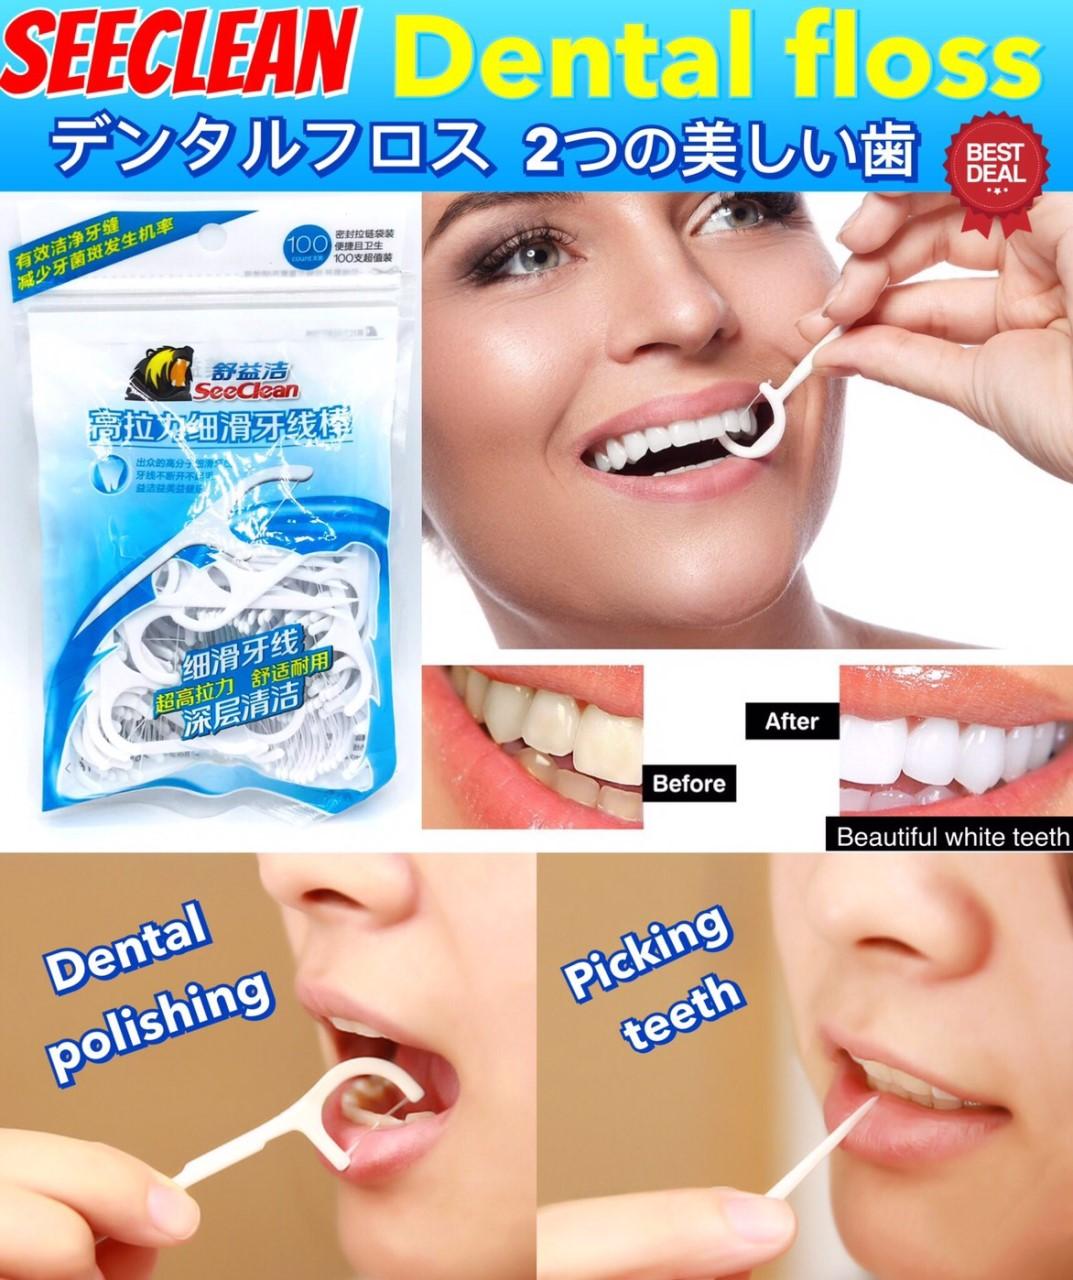 Namita Seeclean Dental floss ไหมขัดฟัน ขัดฟัน ขาว พร้อมหัว แคะซอกฟัน